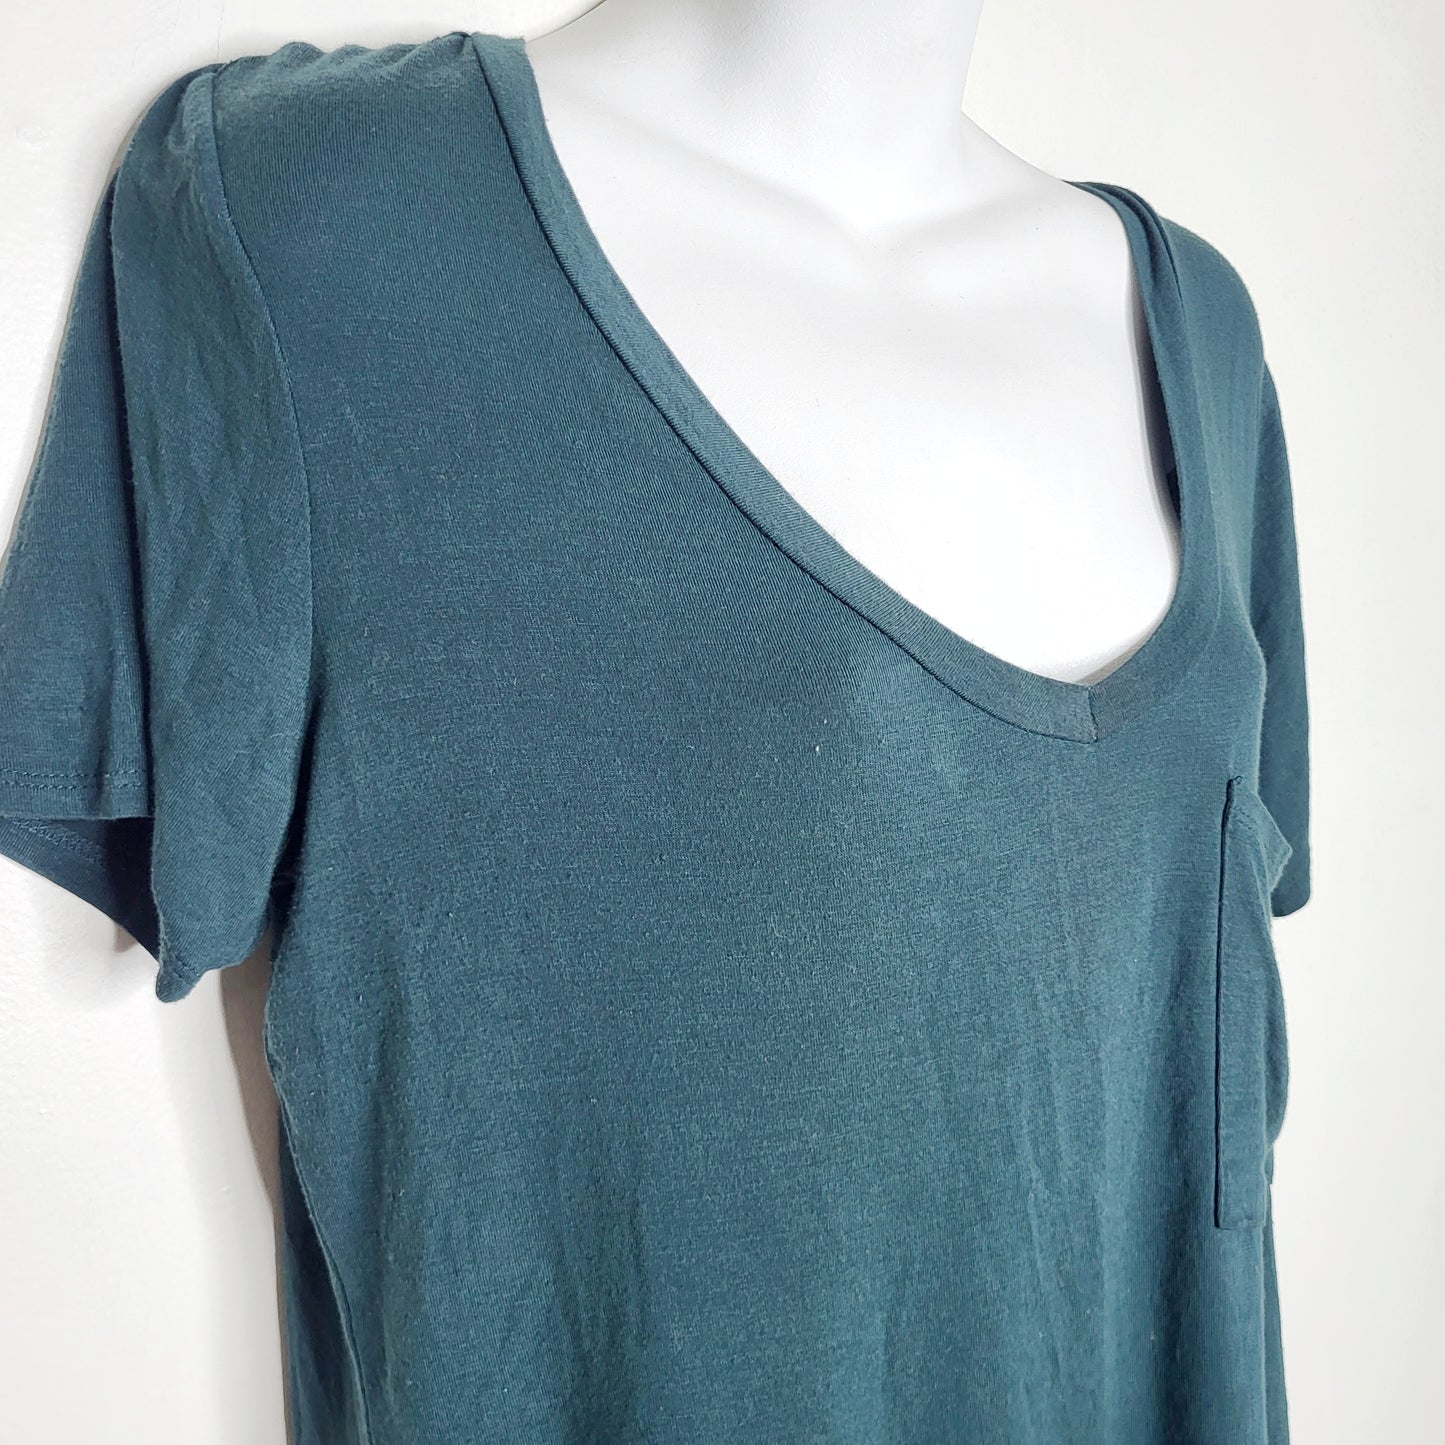 CHND2 - Bluenotes forest green swing t-shirt, size medium, slight wear